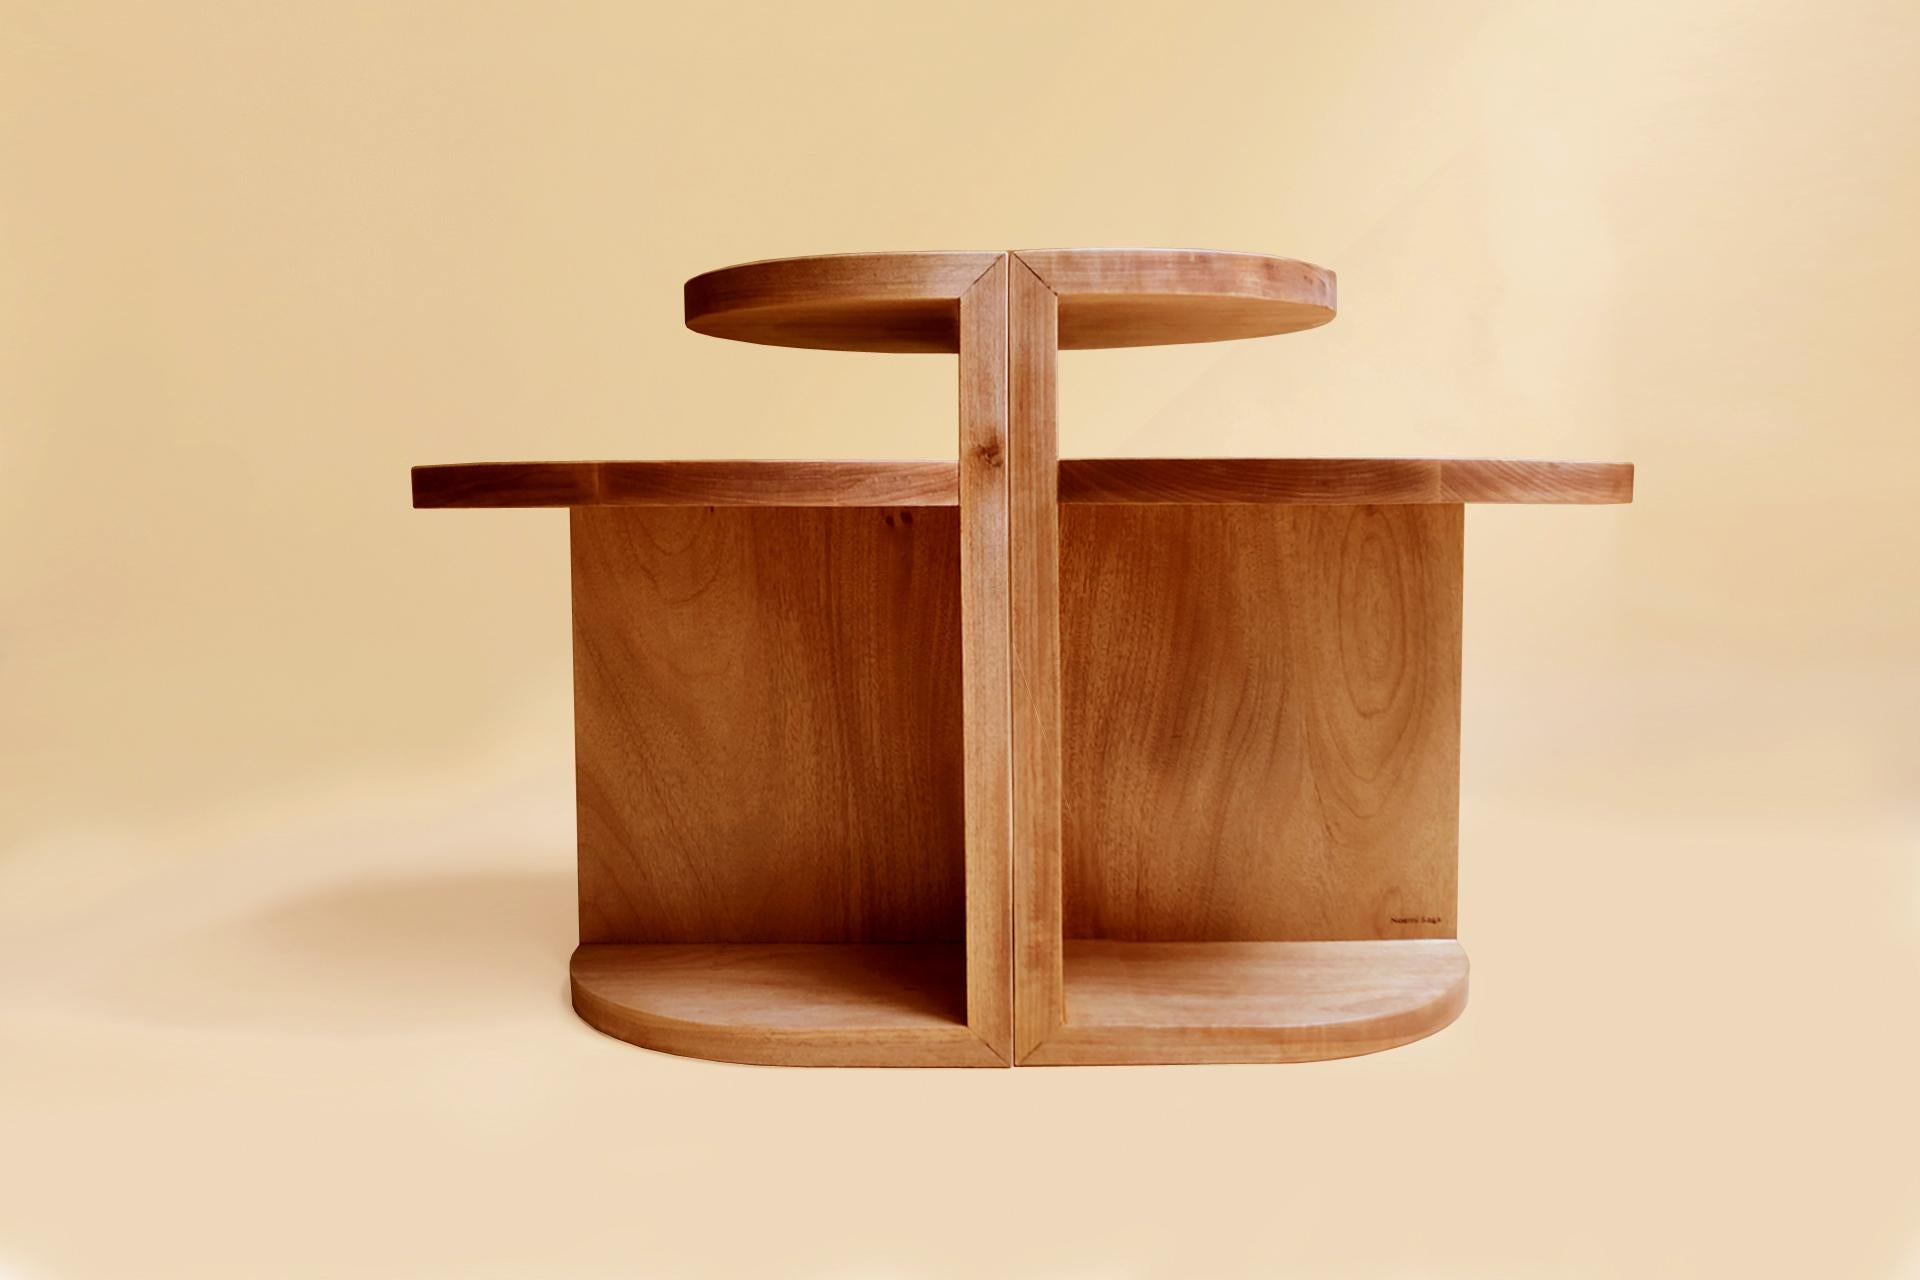 Brazilian Contemporary Café Side Table in Brazilian Solid wood In New Condition For Sale In Sao Paulo, BR